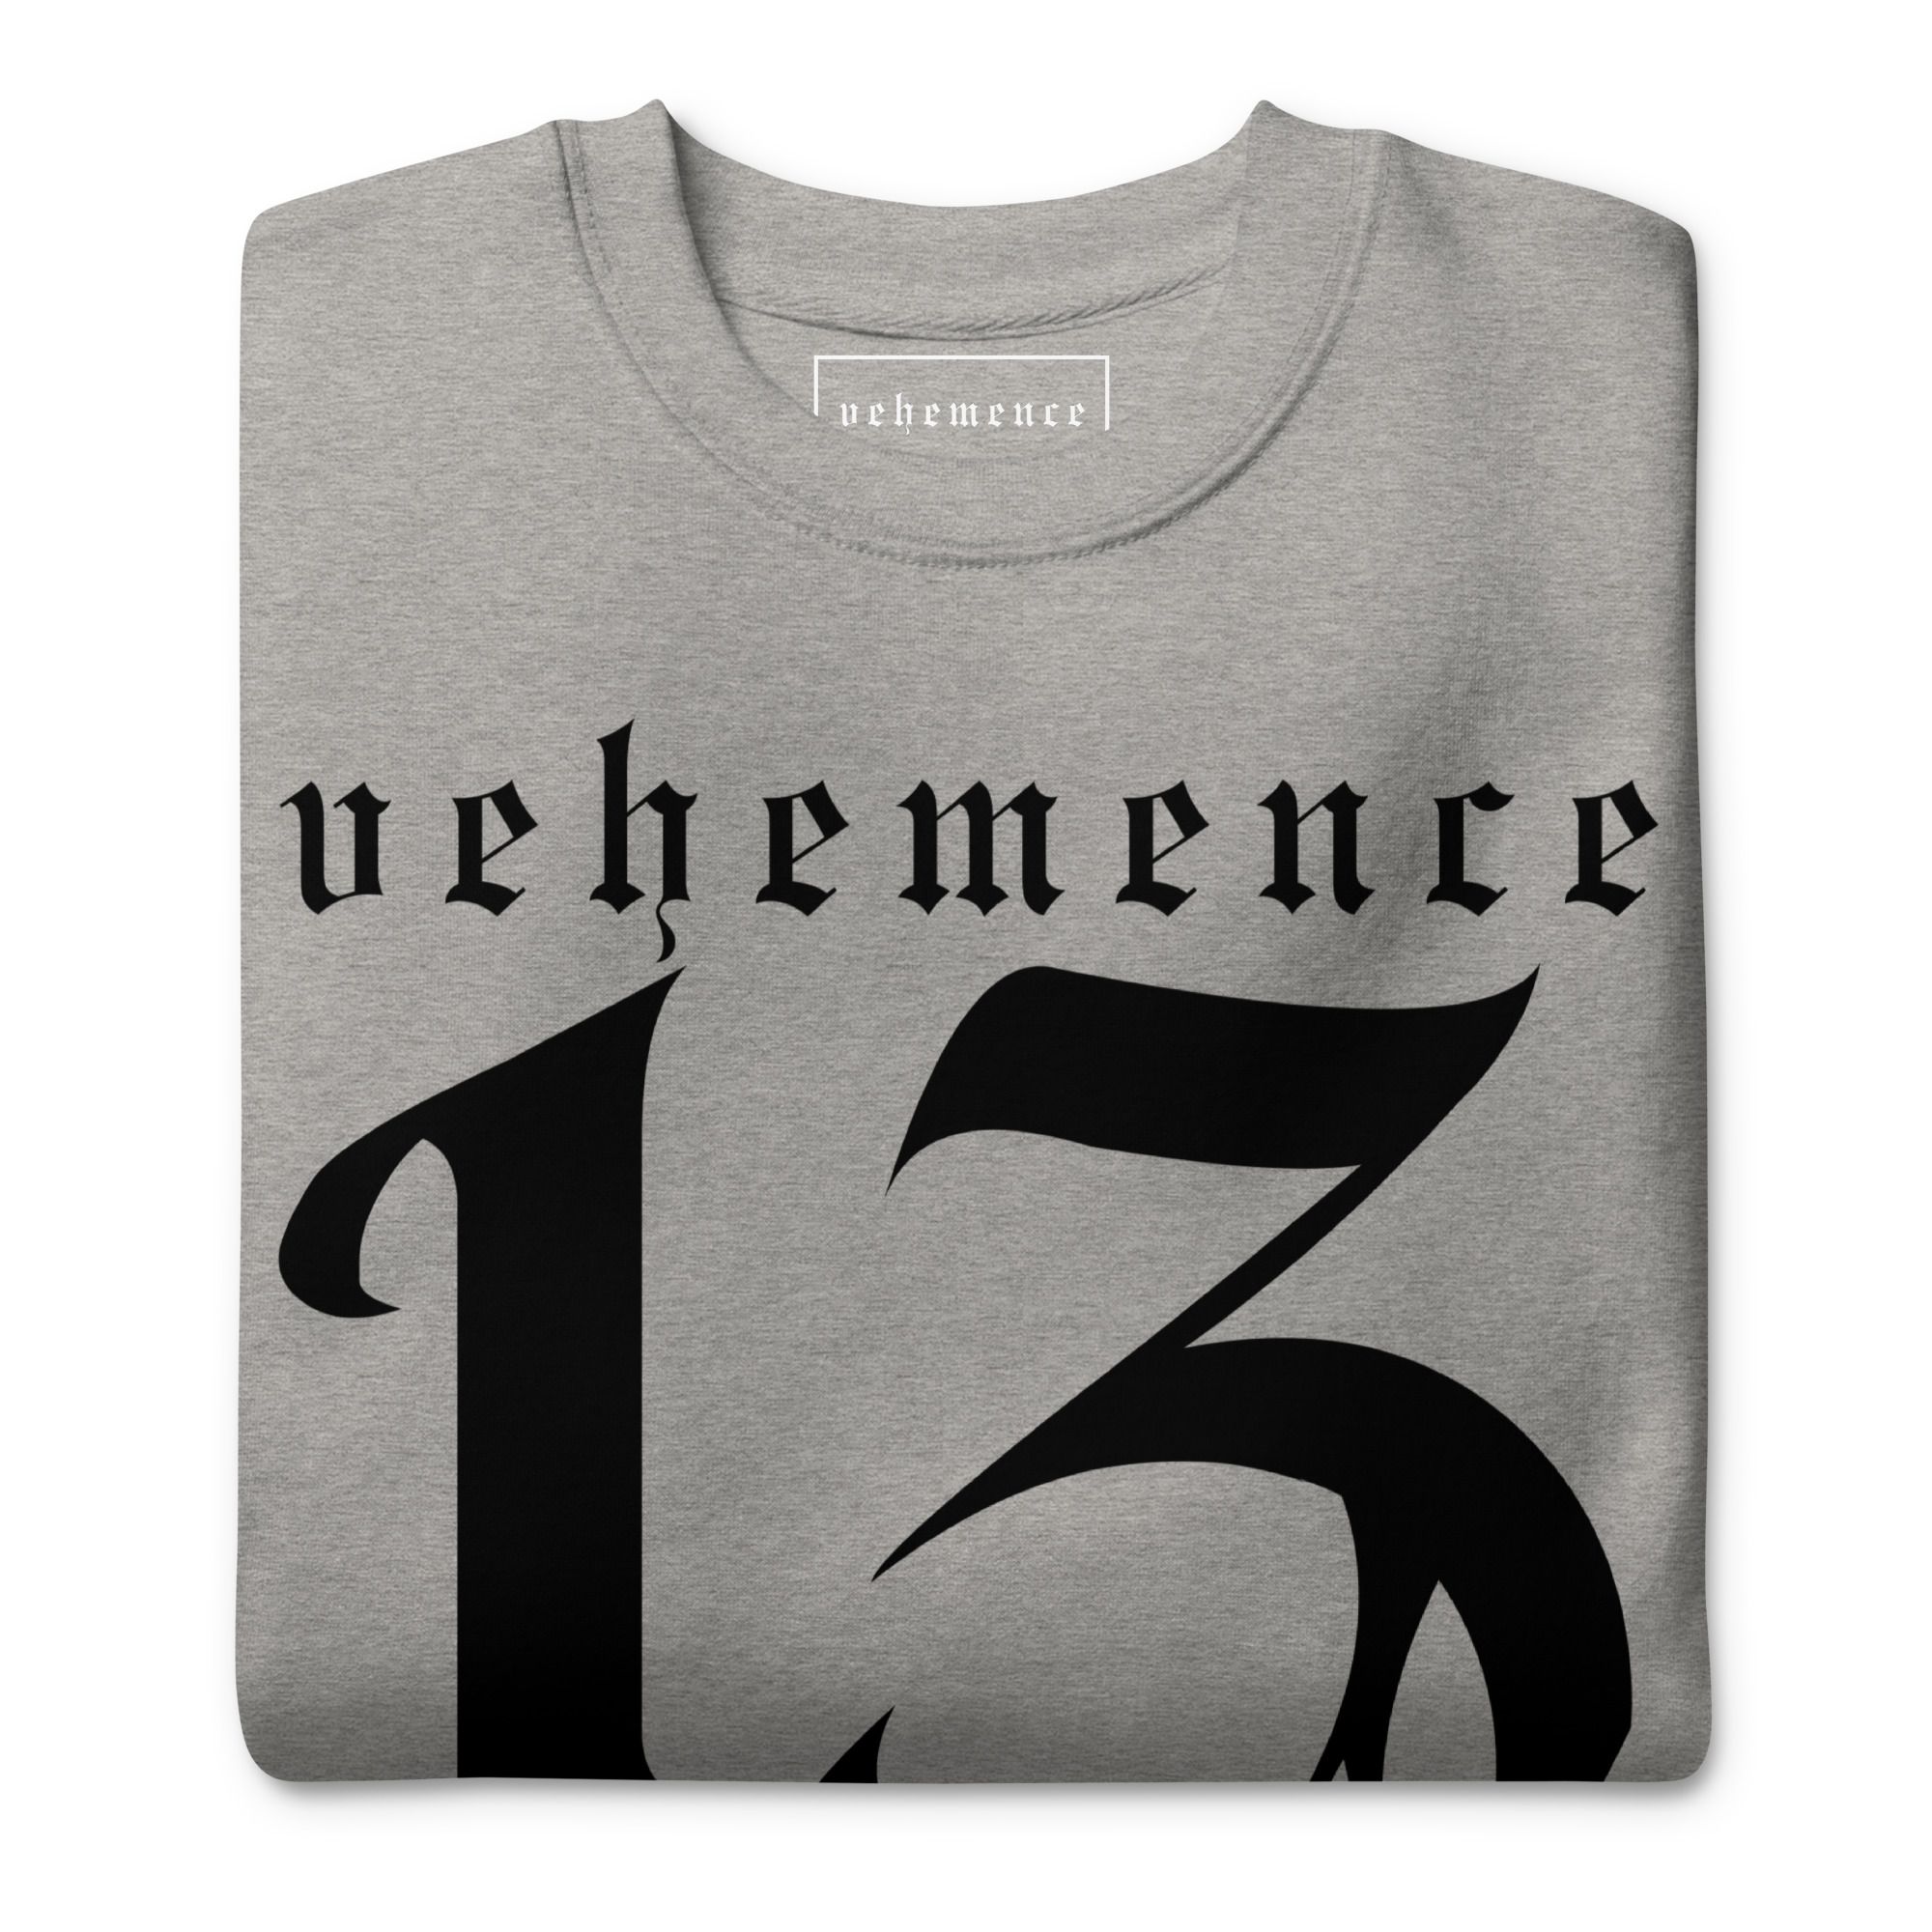 The 13th Sweatshirt